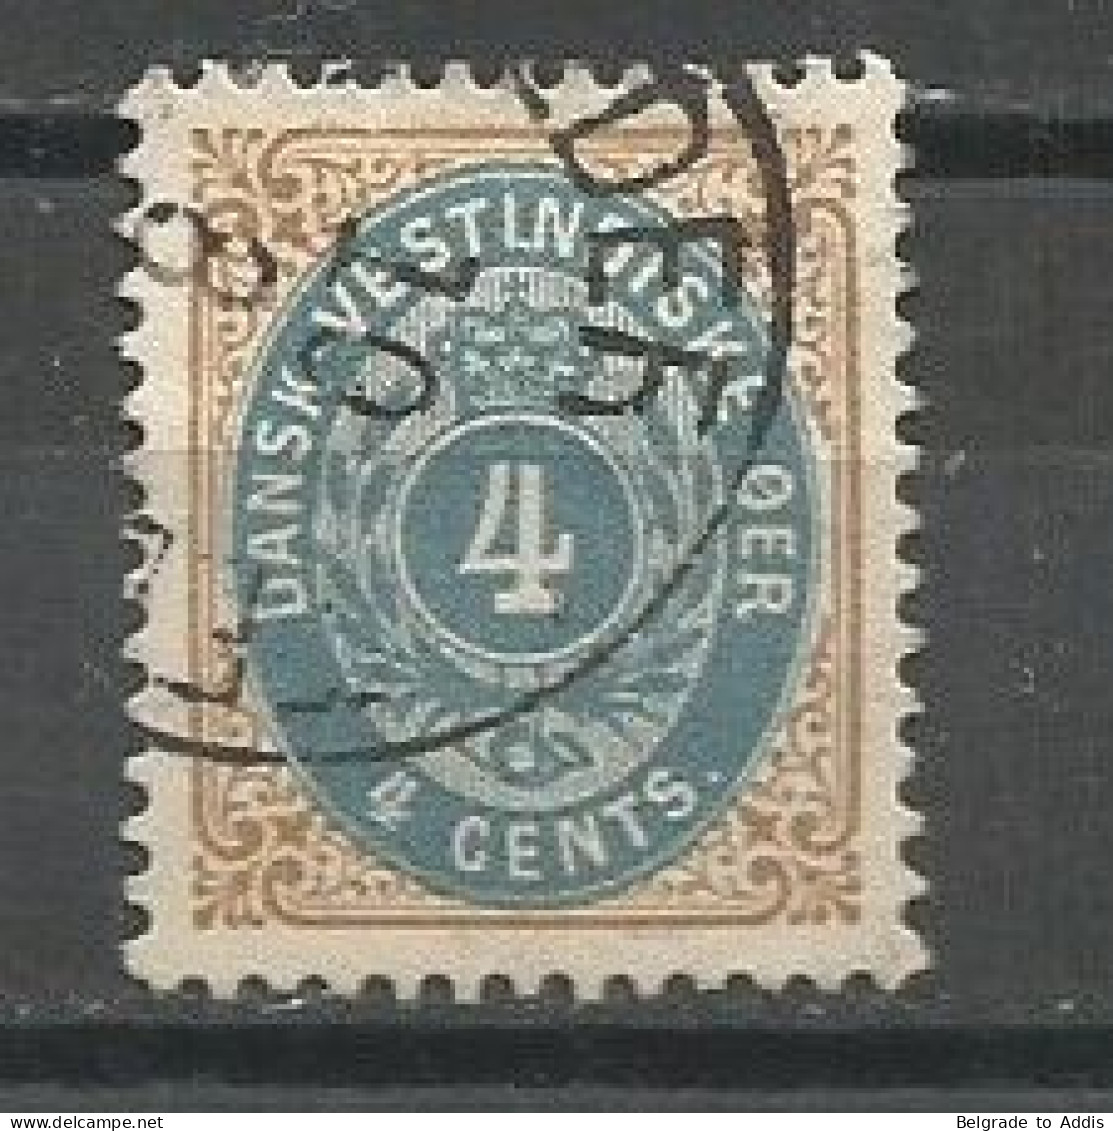 Denmark Danish West Indies Sc.#18 Used 1901 - Denmark (West Indies)